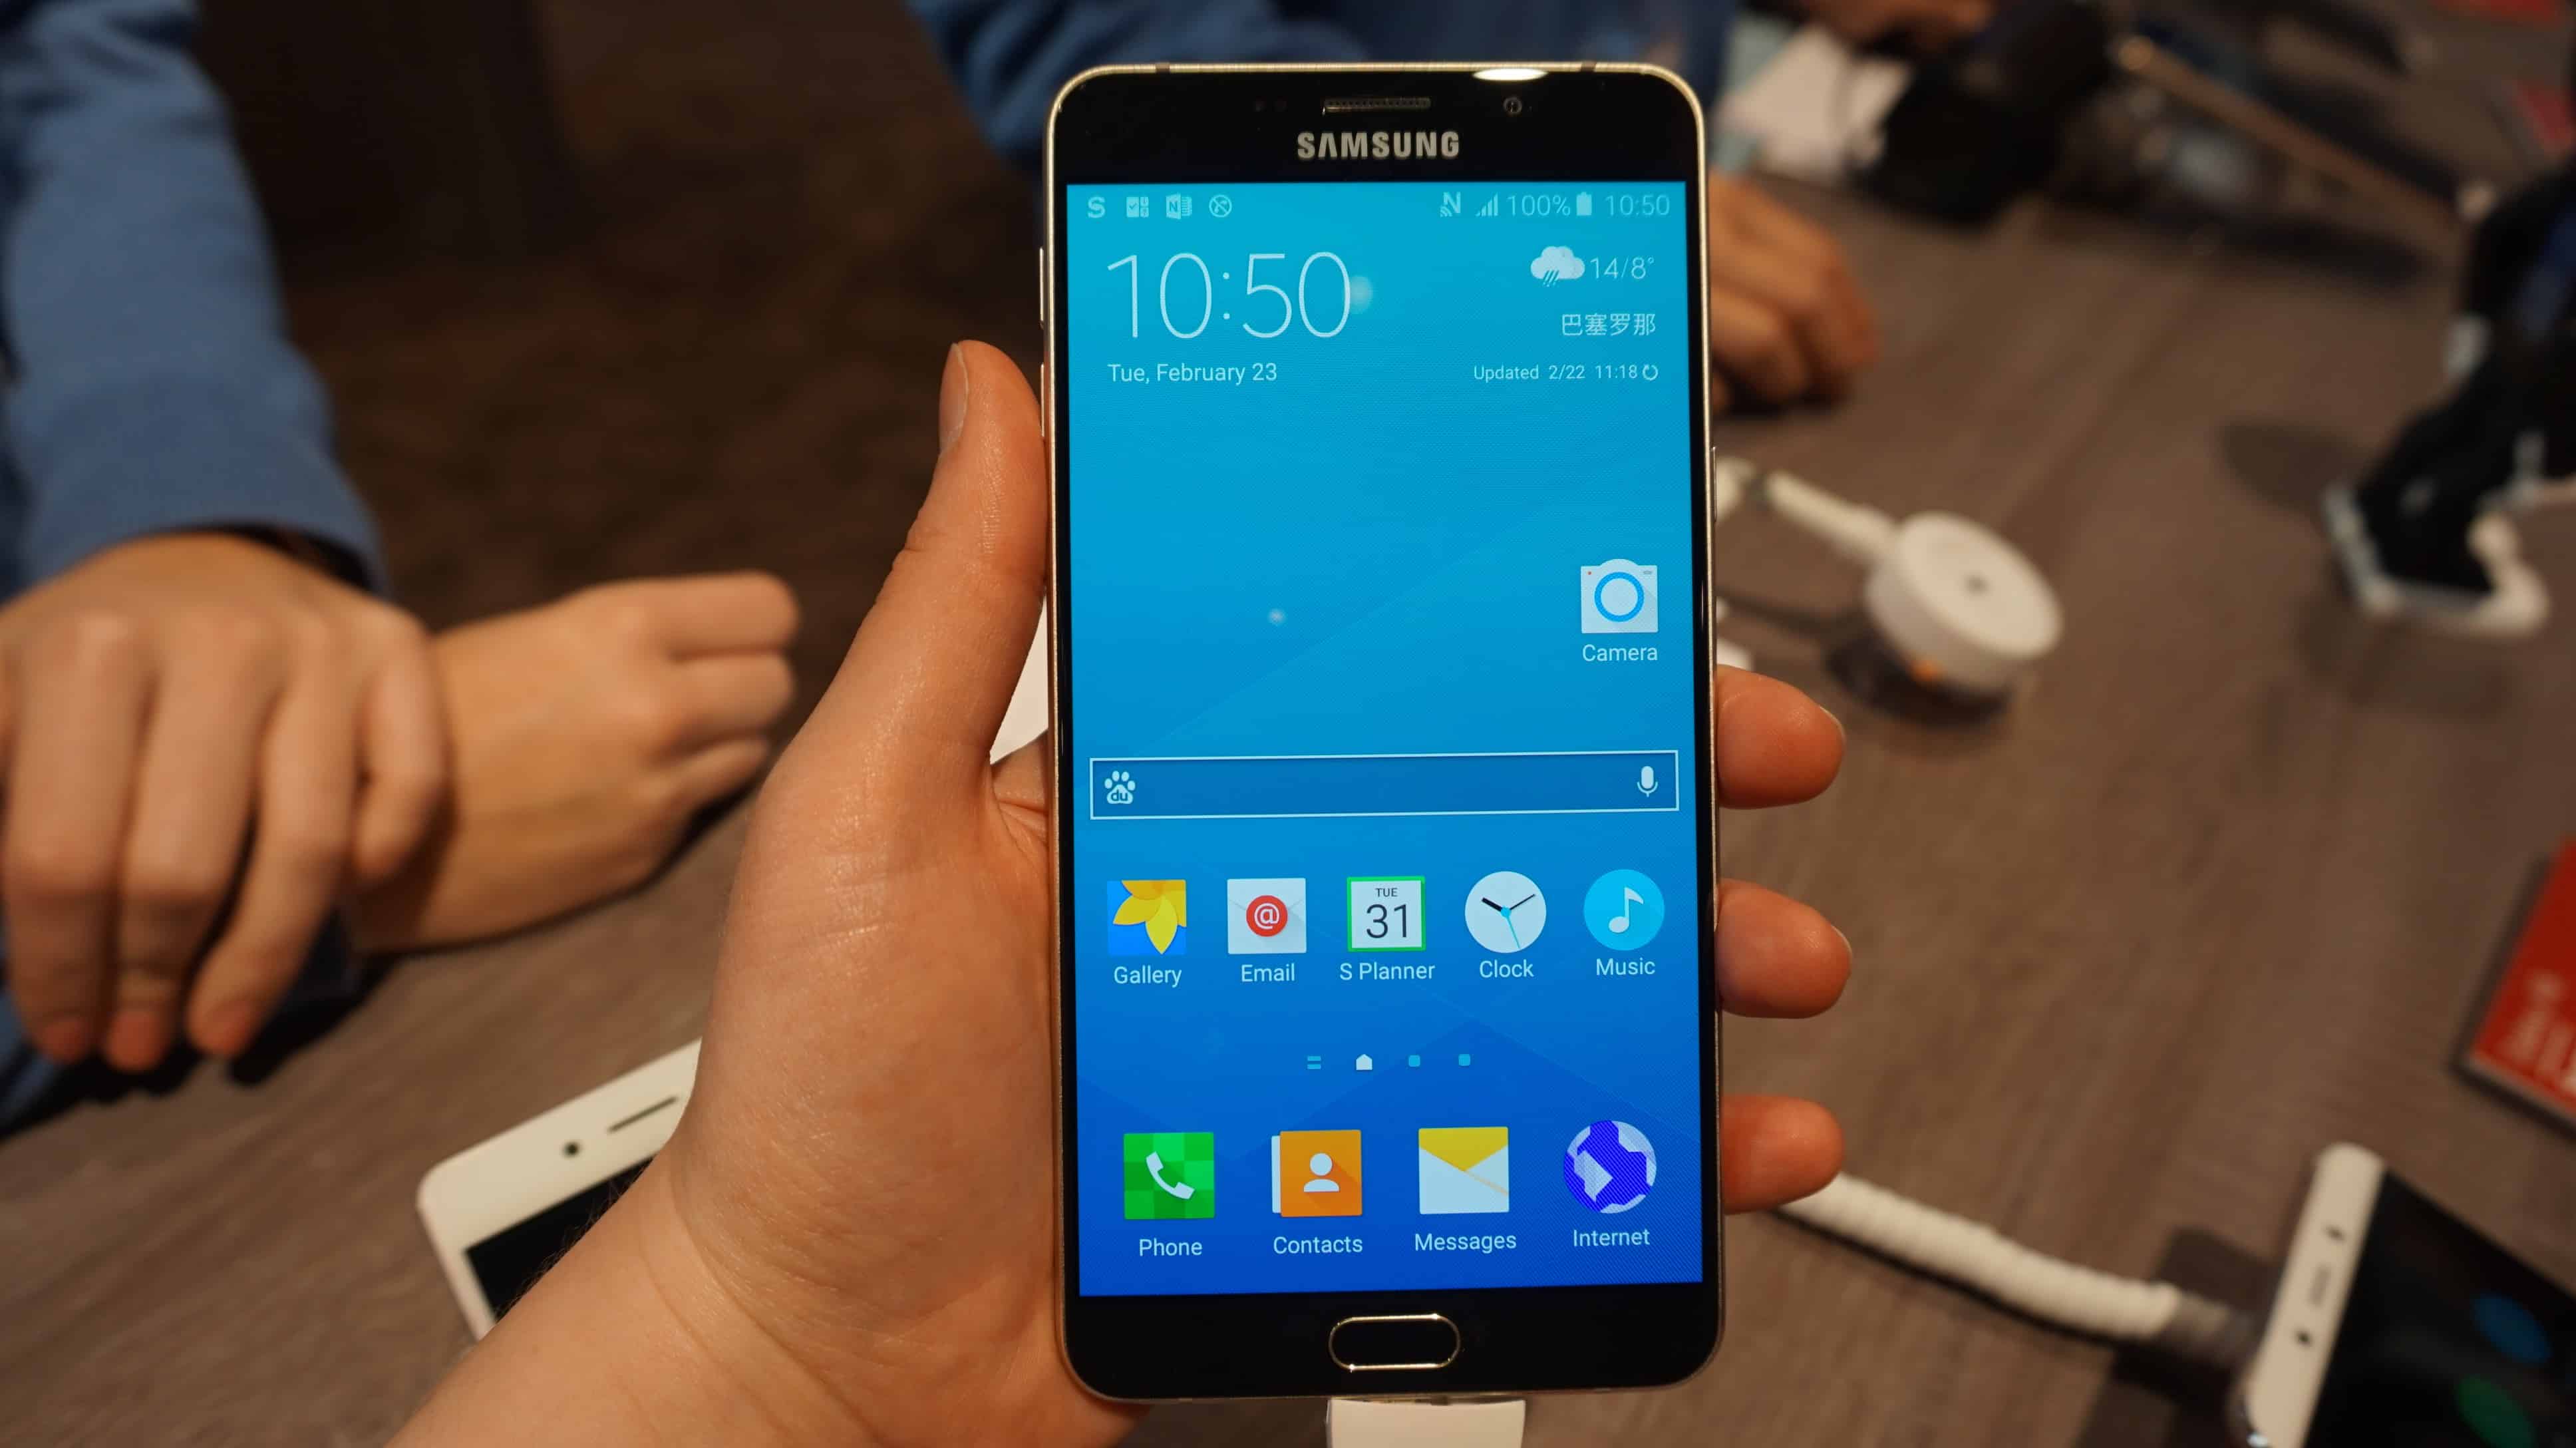 Smartphone Samsung Galaxy A9 Dual Chip Android 6.0 Tela 6" Octa-Core 1.8 Ghz 32GB 4G Câmera 16MP - Preto